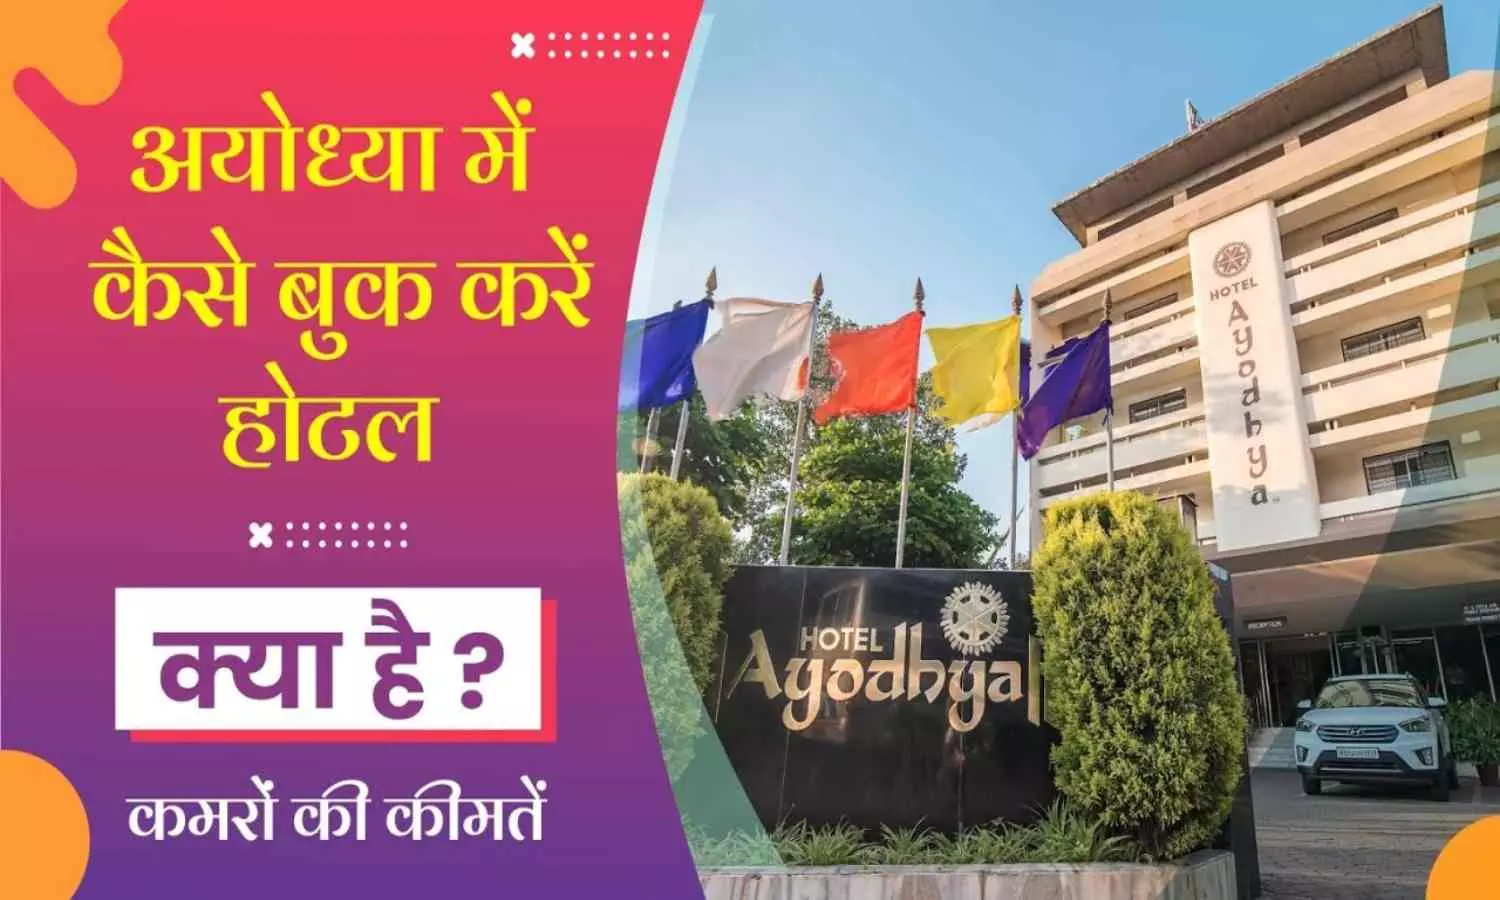 Hotels in Ayodhya